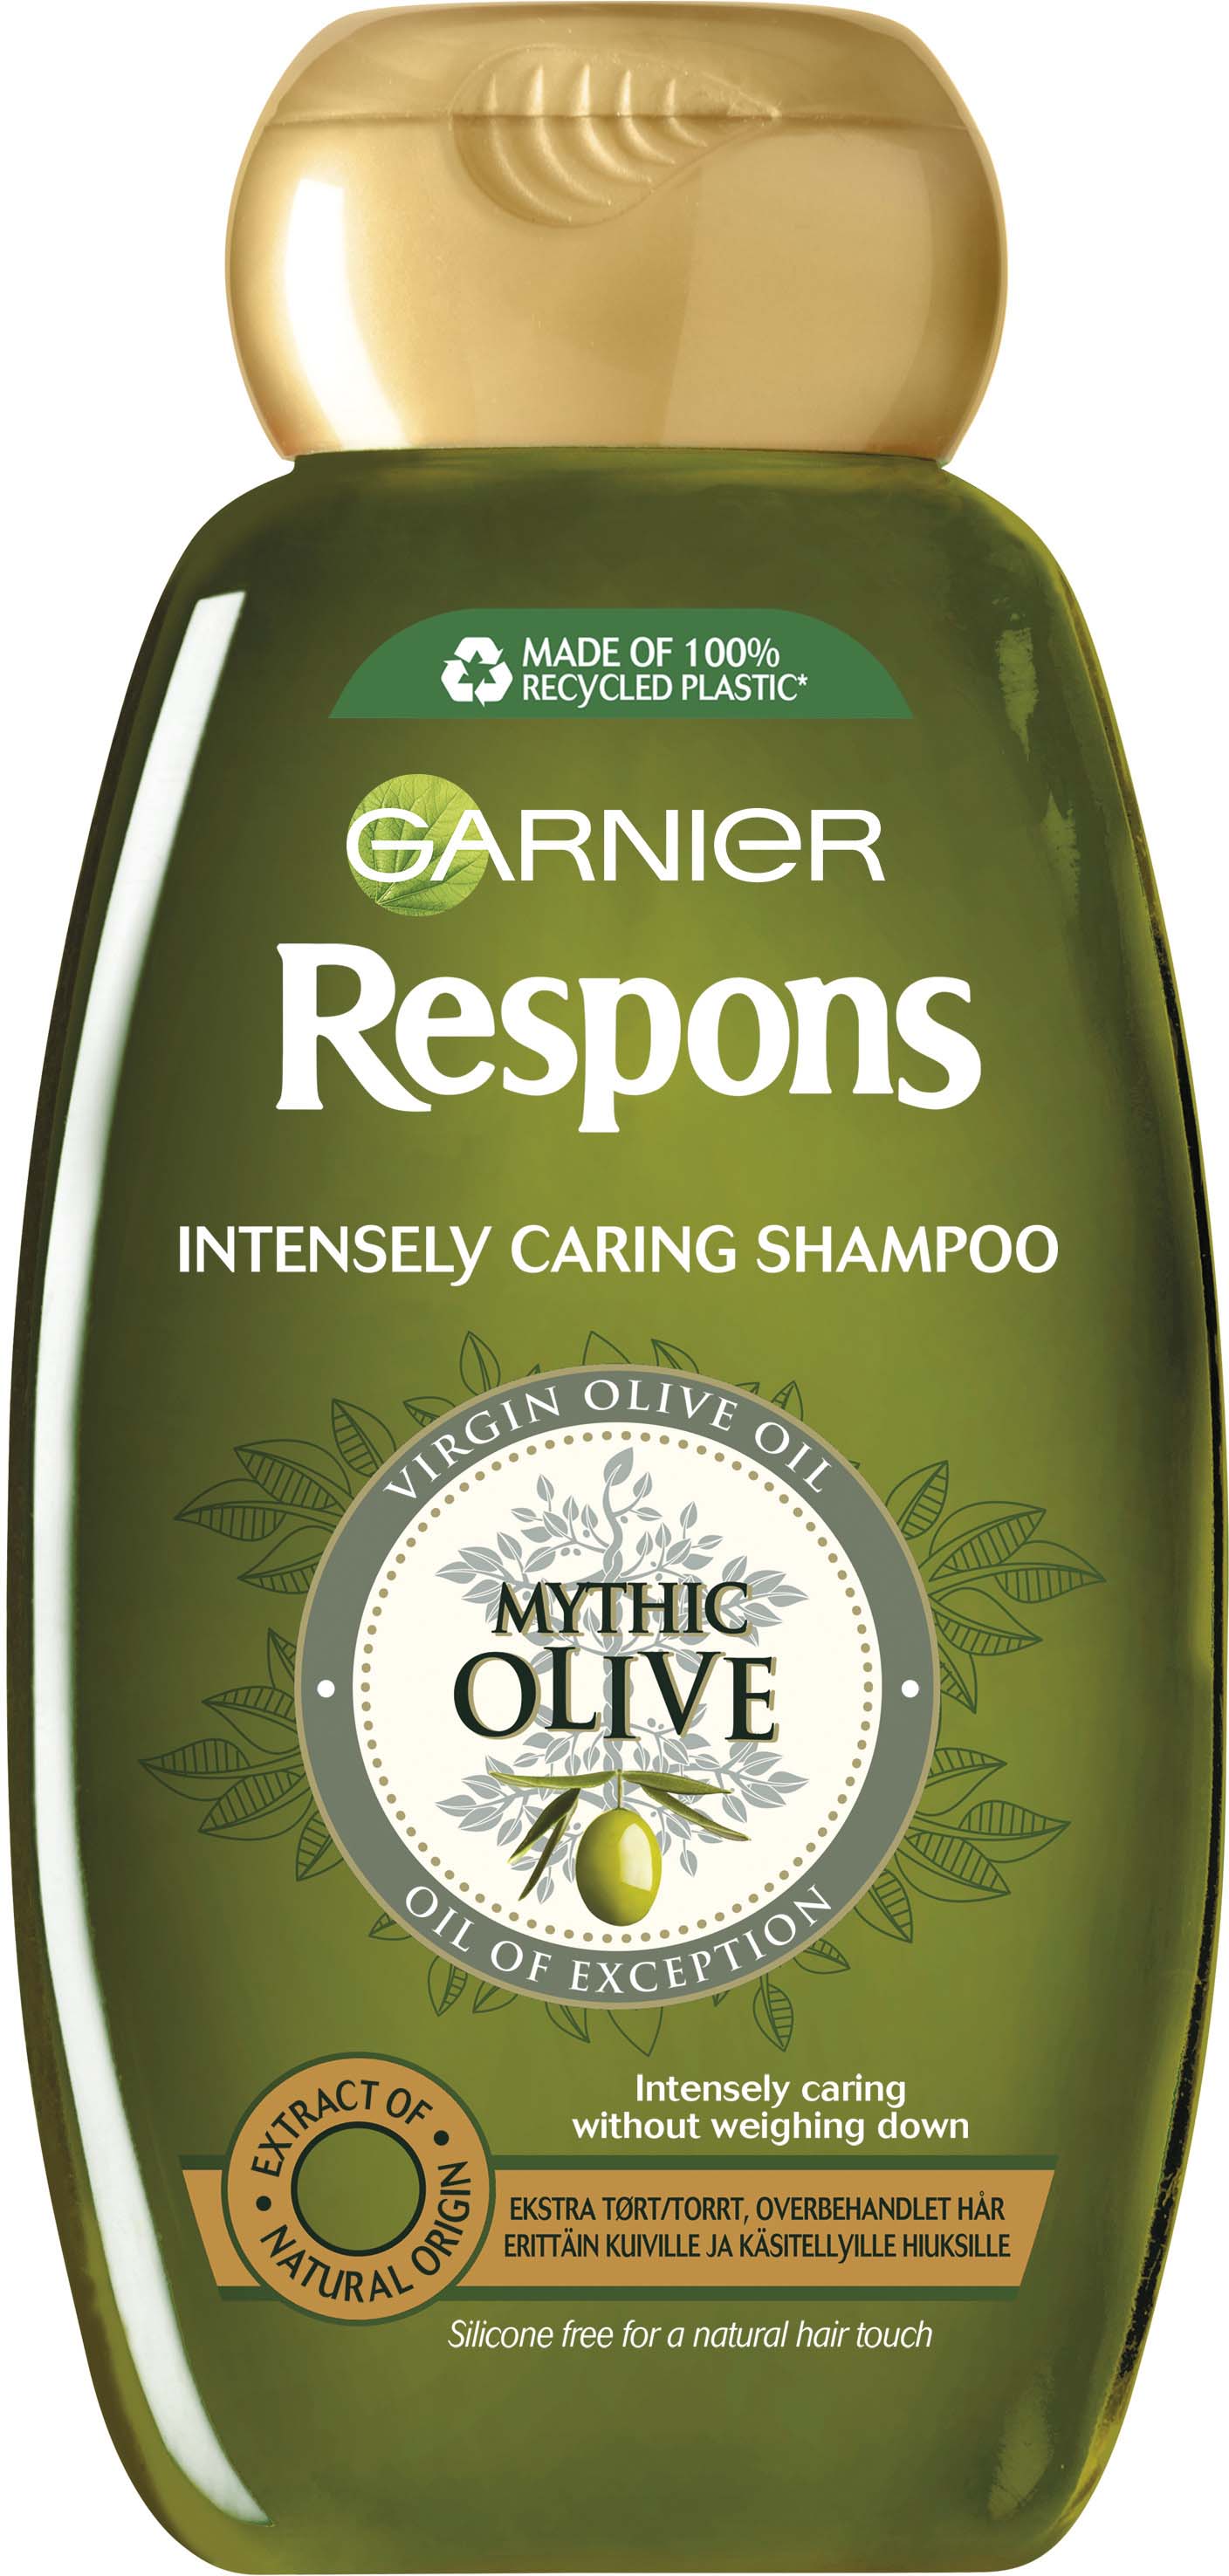 Hej Rend golf Garnier Respons Mythic Olive Shampoo 250 ml | lyko.com